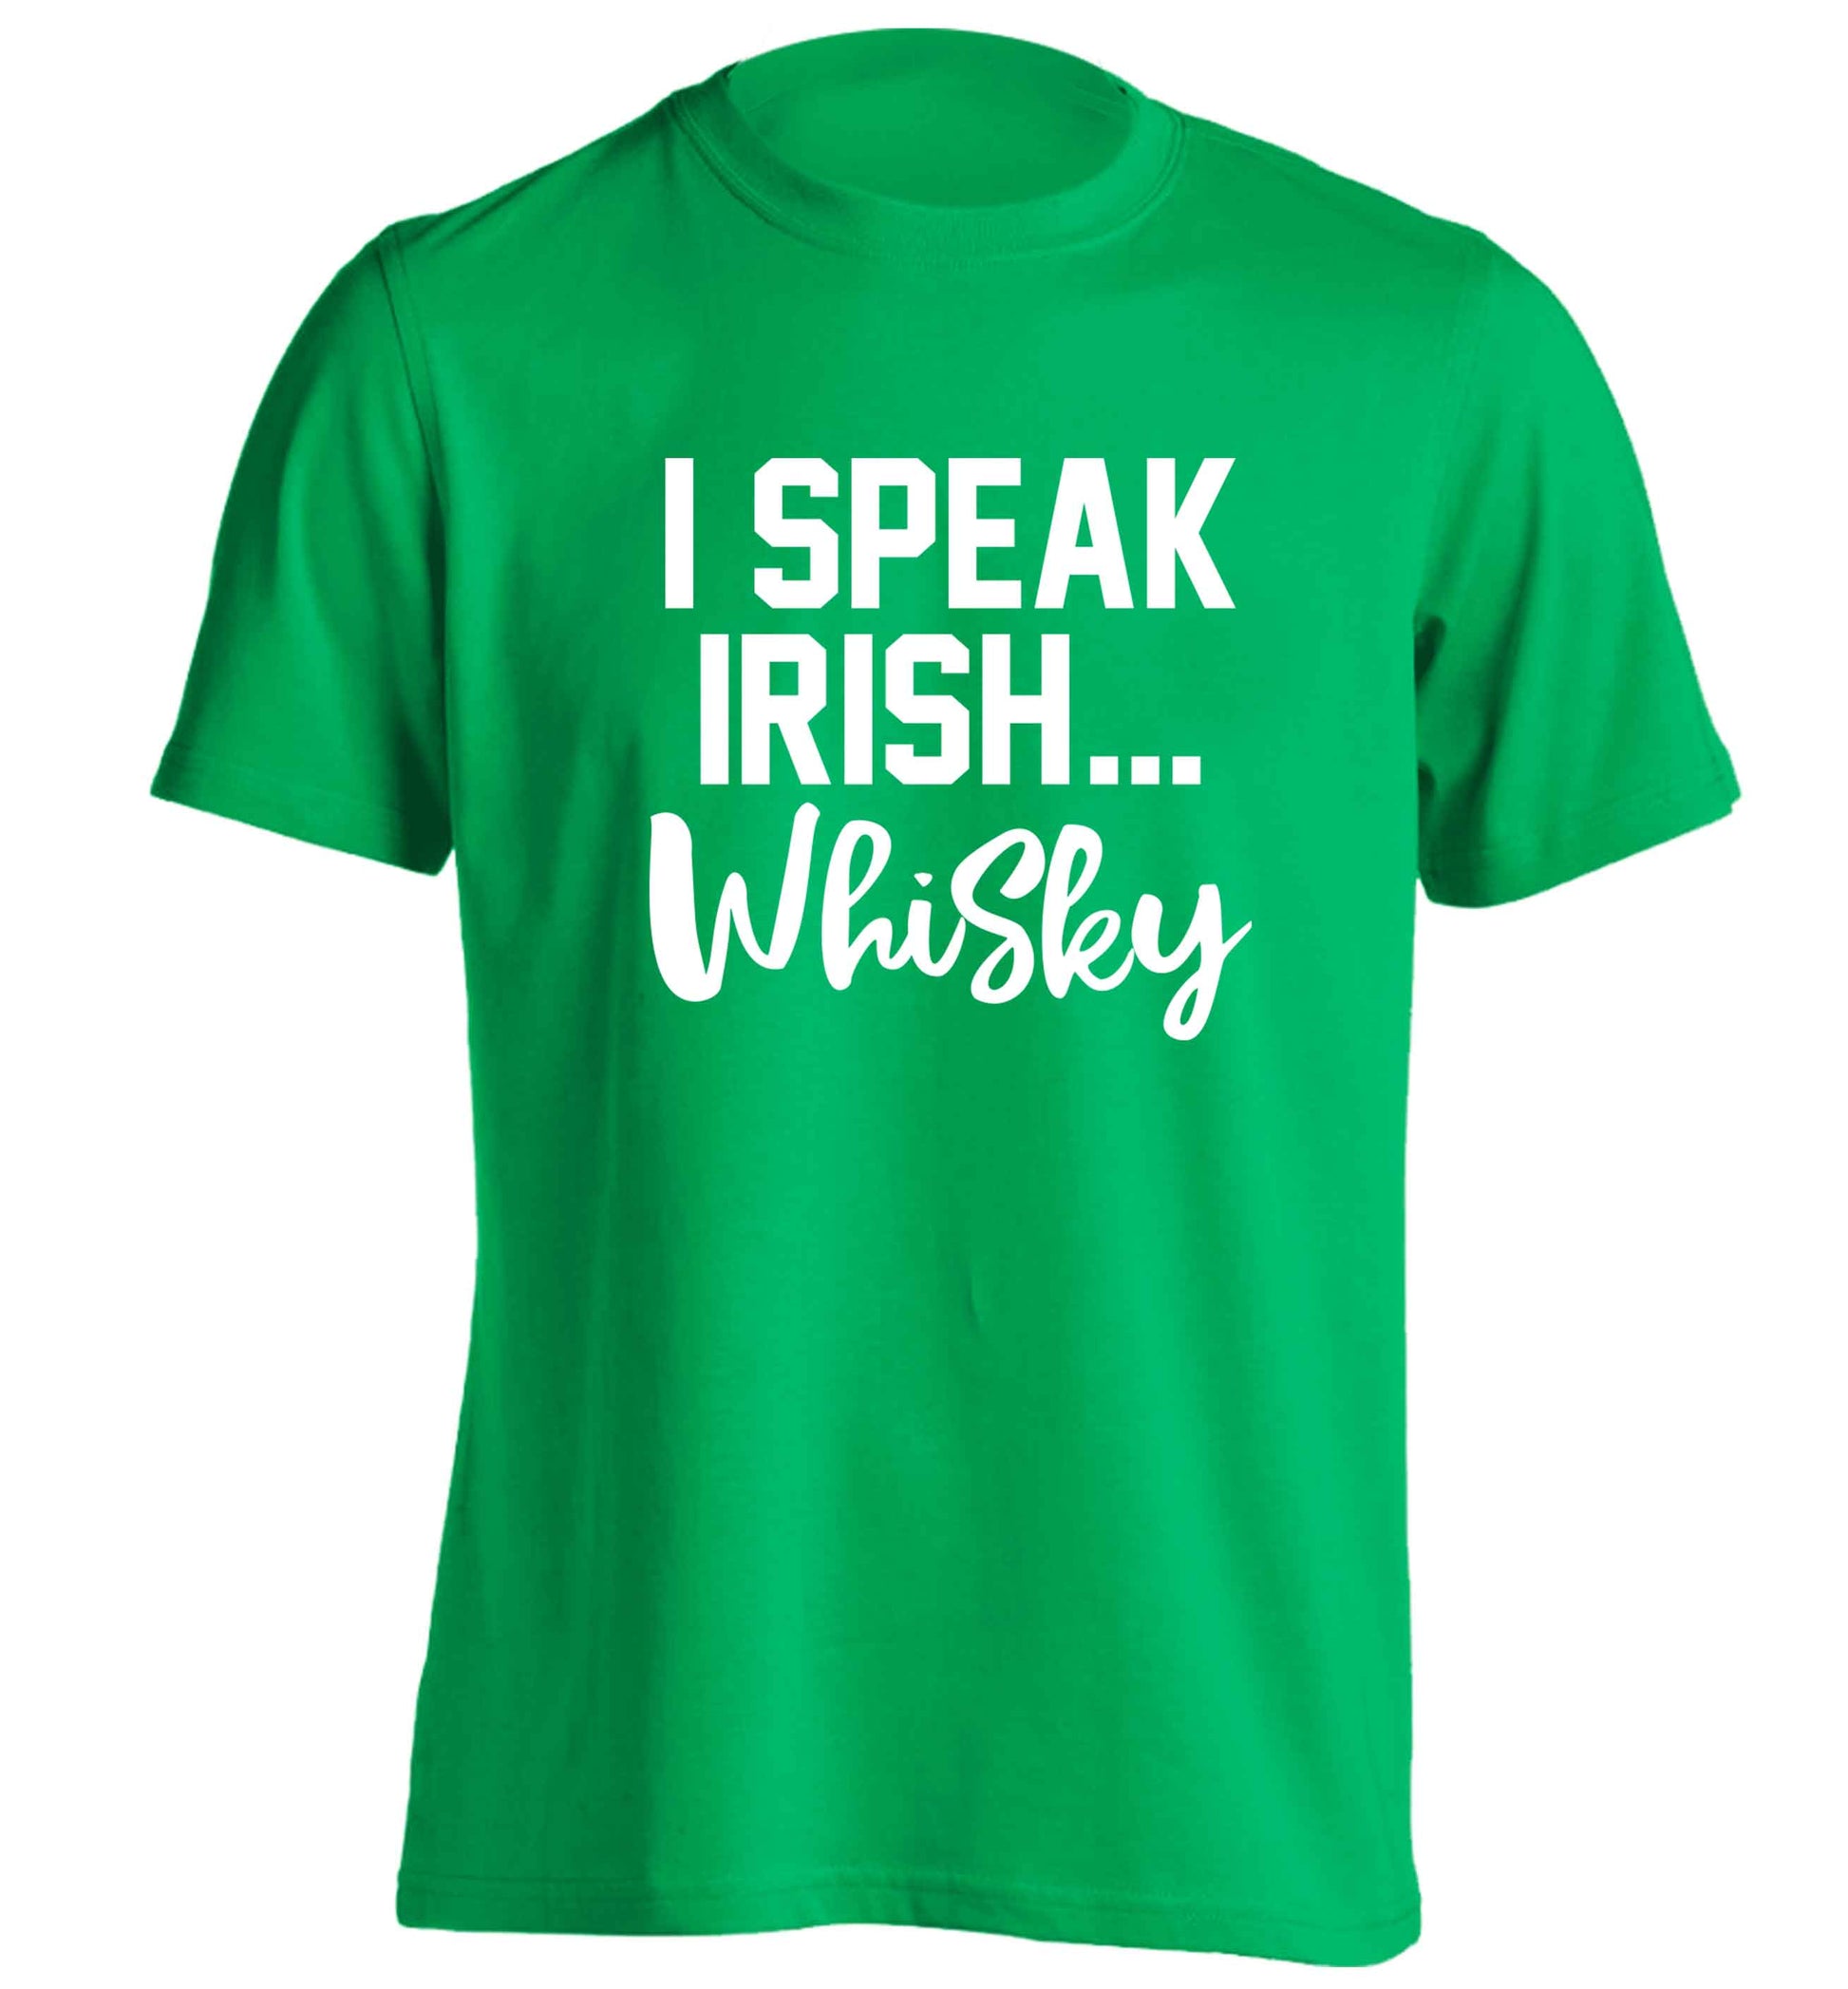 I speak Irish whisky adults unisex green Tshirt 2XL